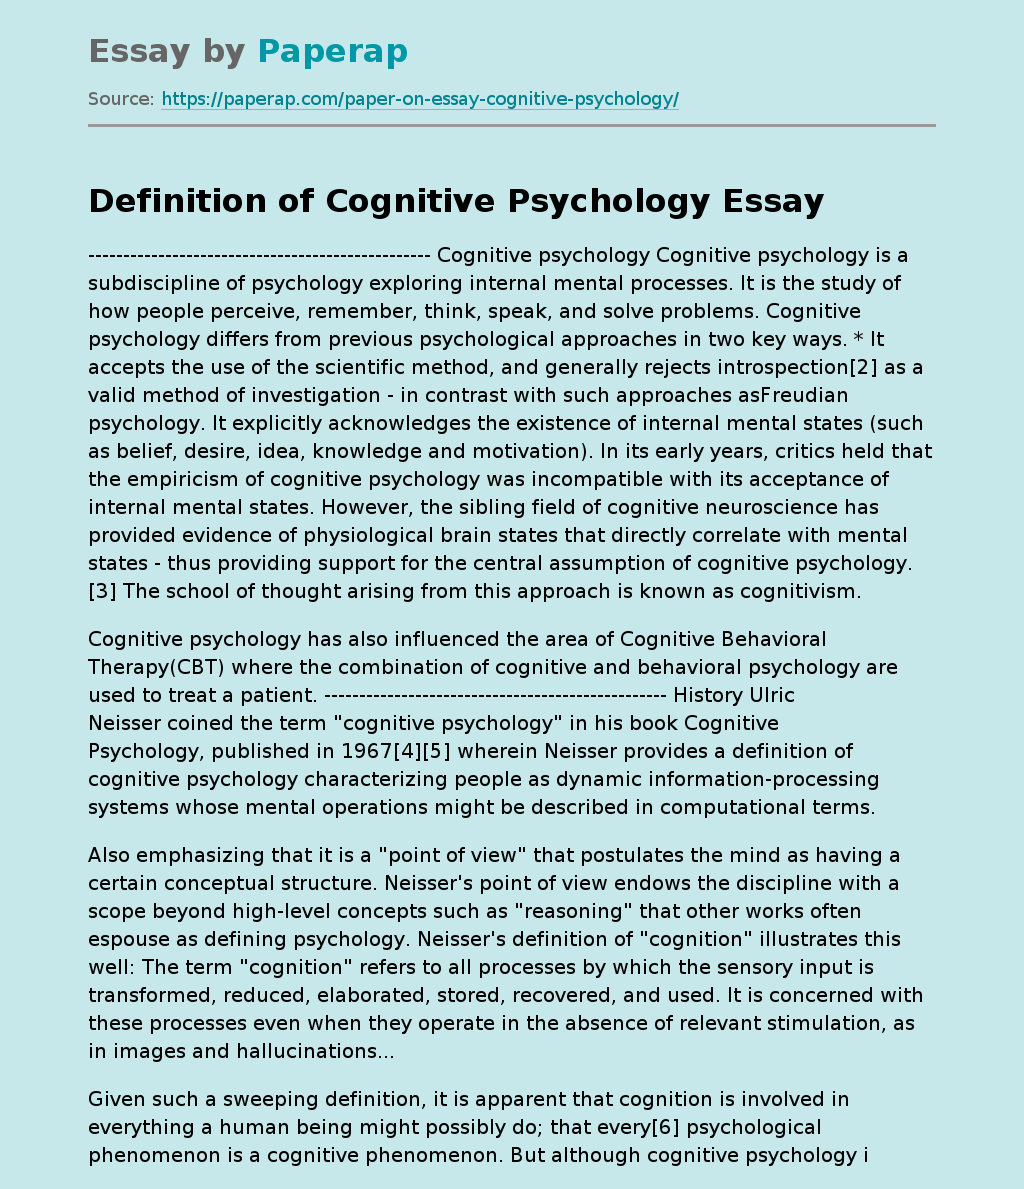 Definition of Cognitive Psychology